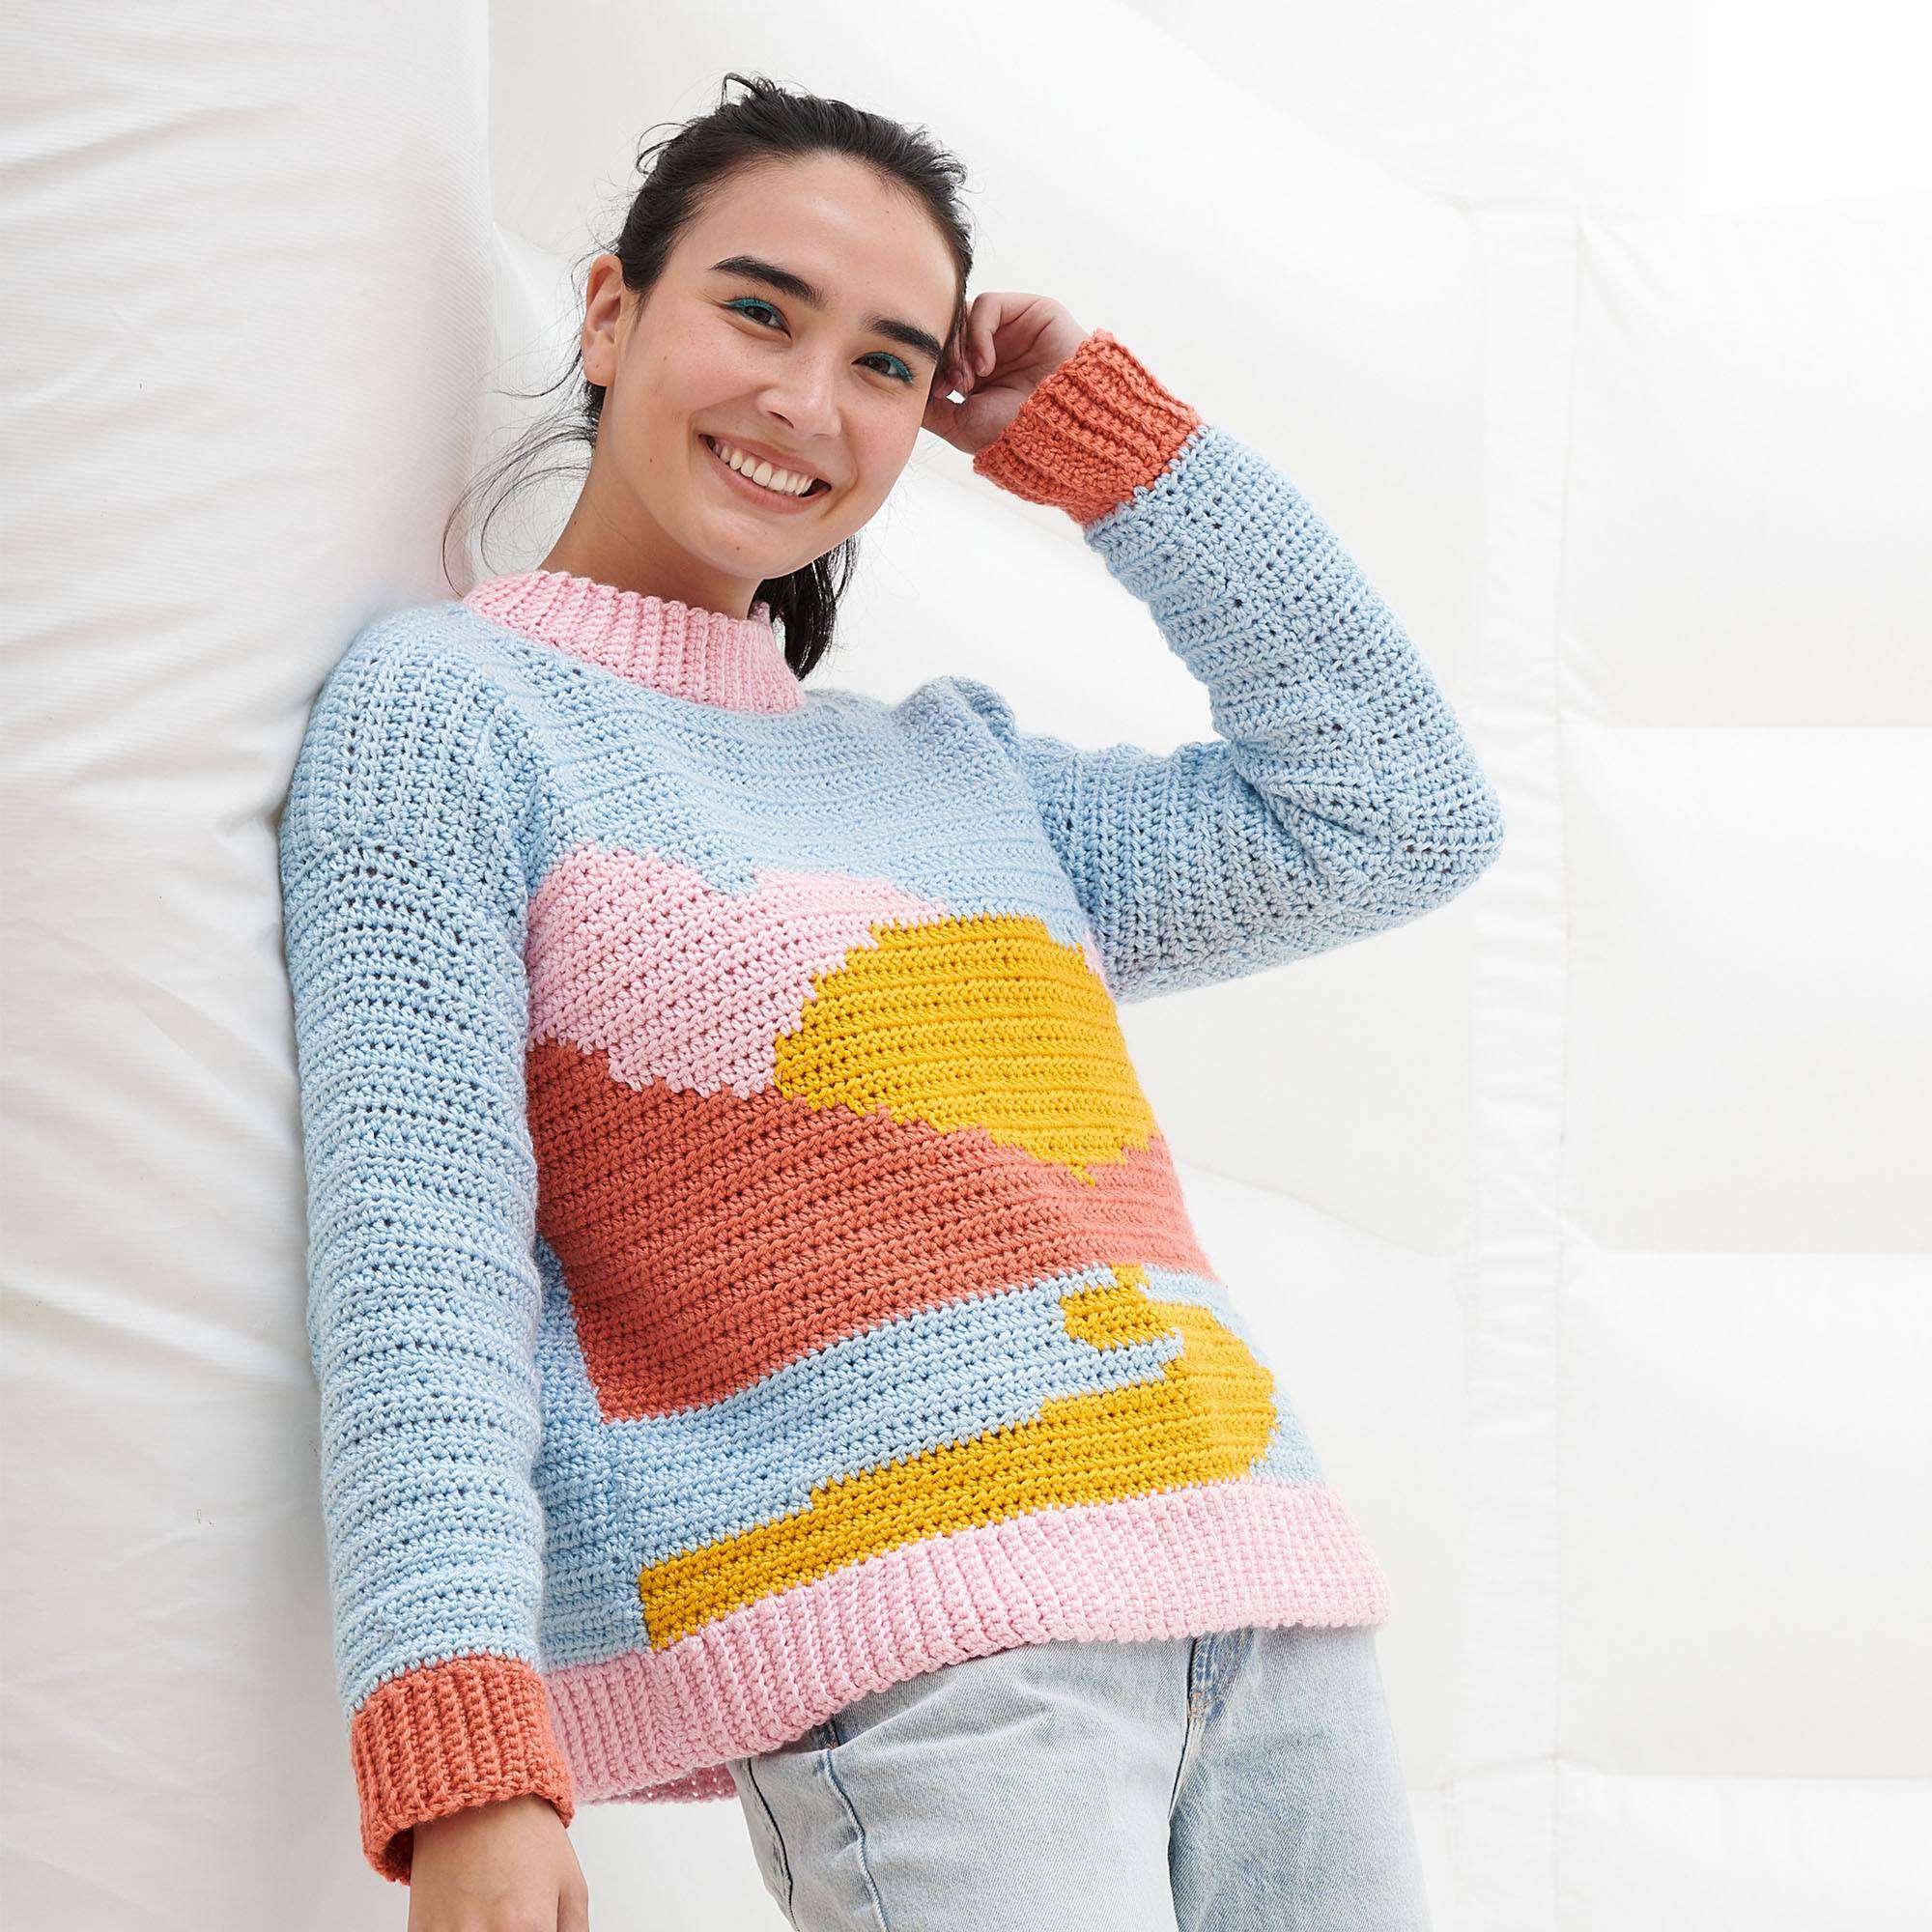 hdc intarsia sweater free pattern - Marly Bird